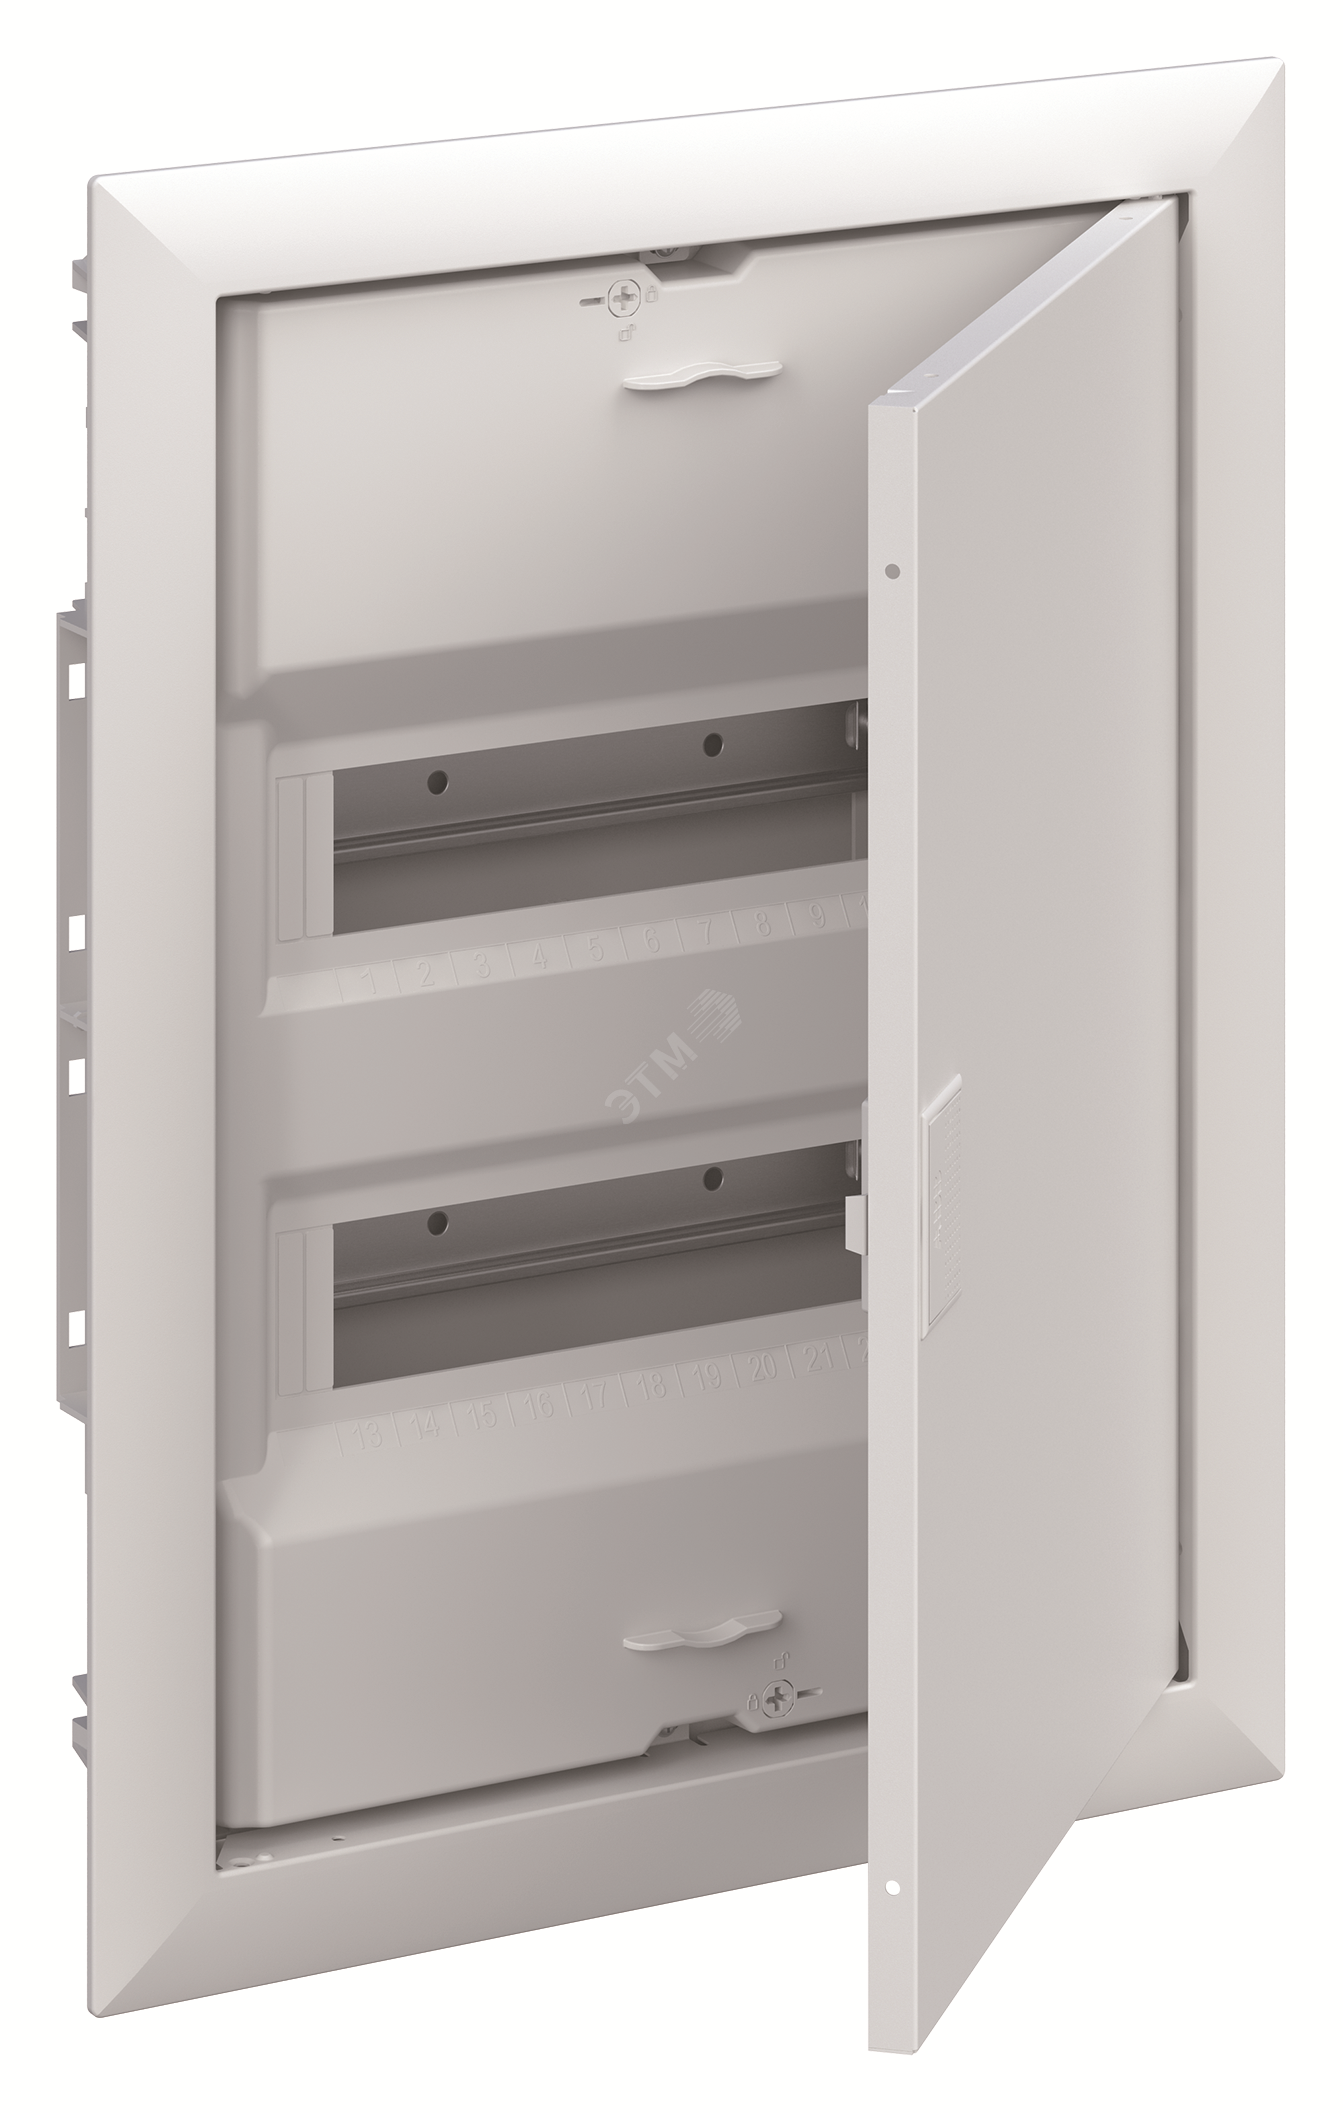 Шкаф внутреннего монтажа на 24М с самозажимными N/PE UK624N3 2CPX077851R9999 ABB - превью 2